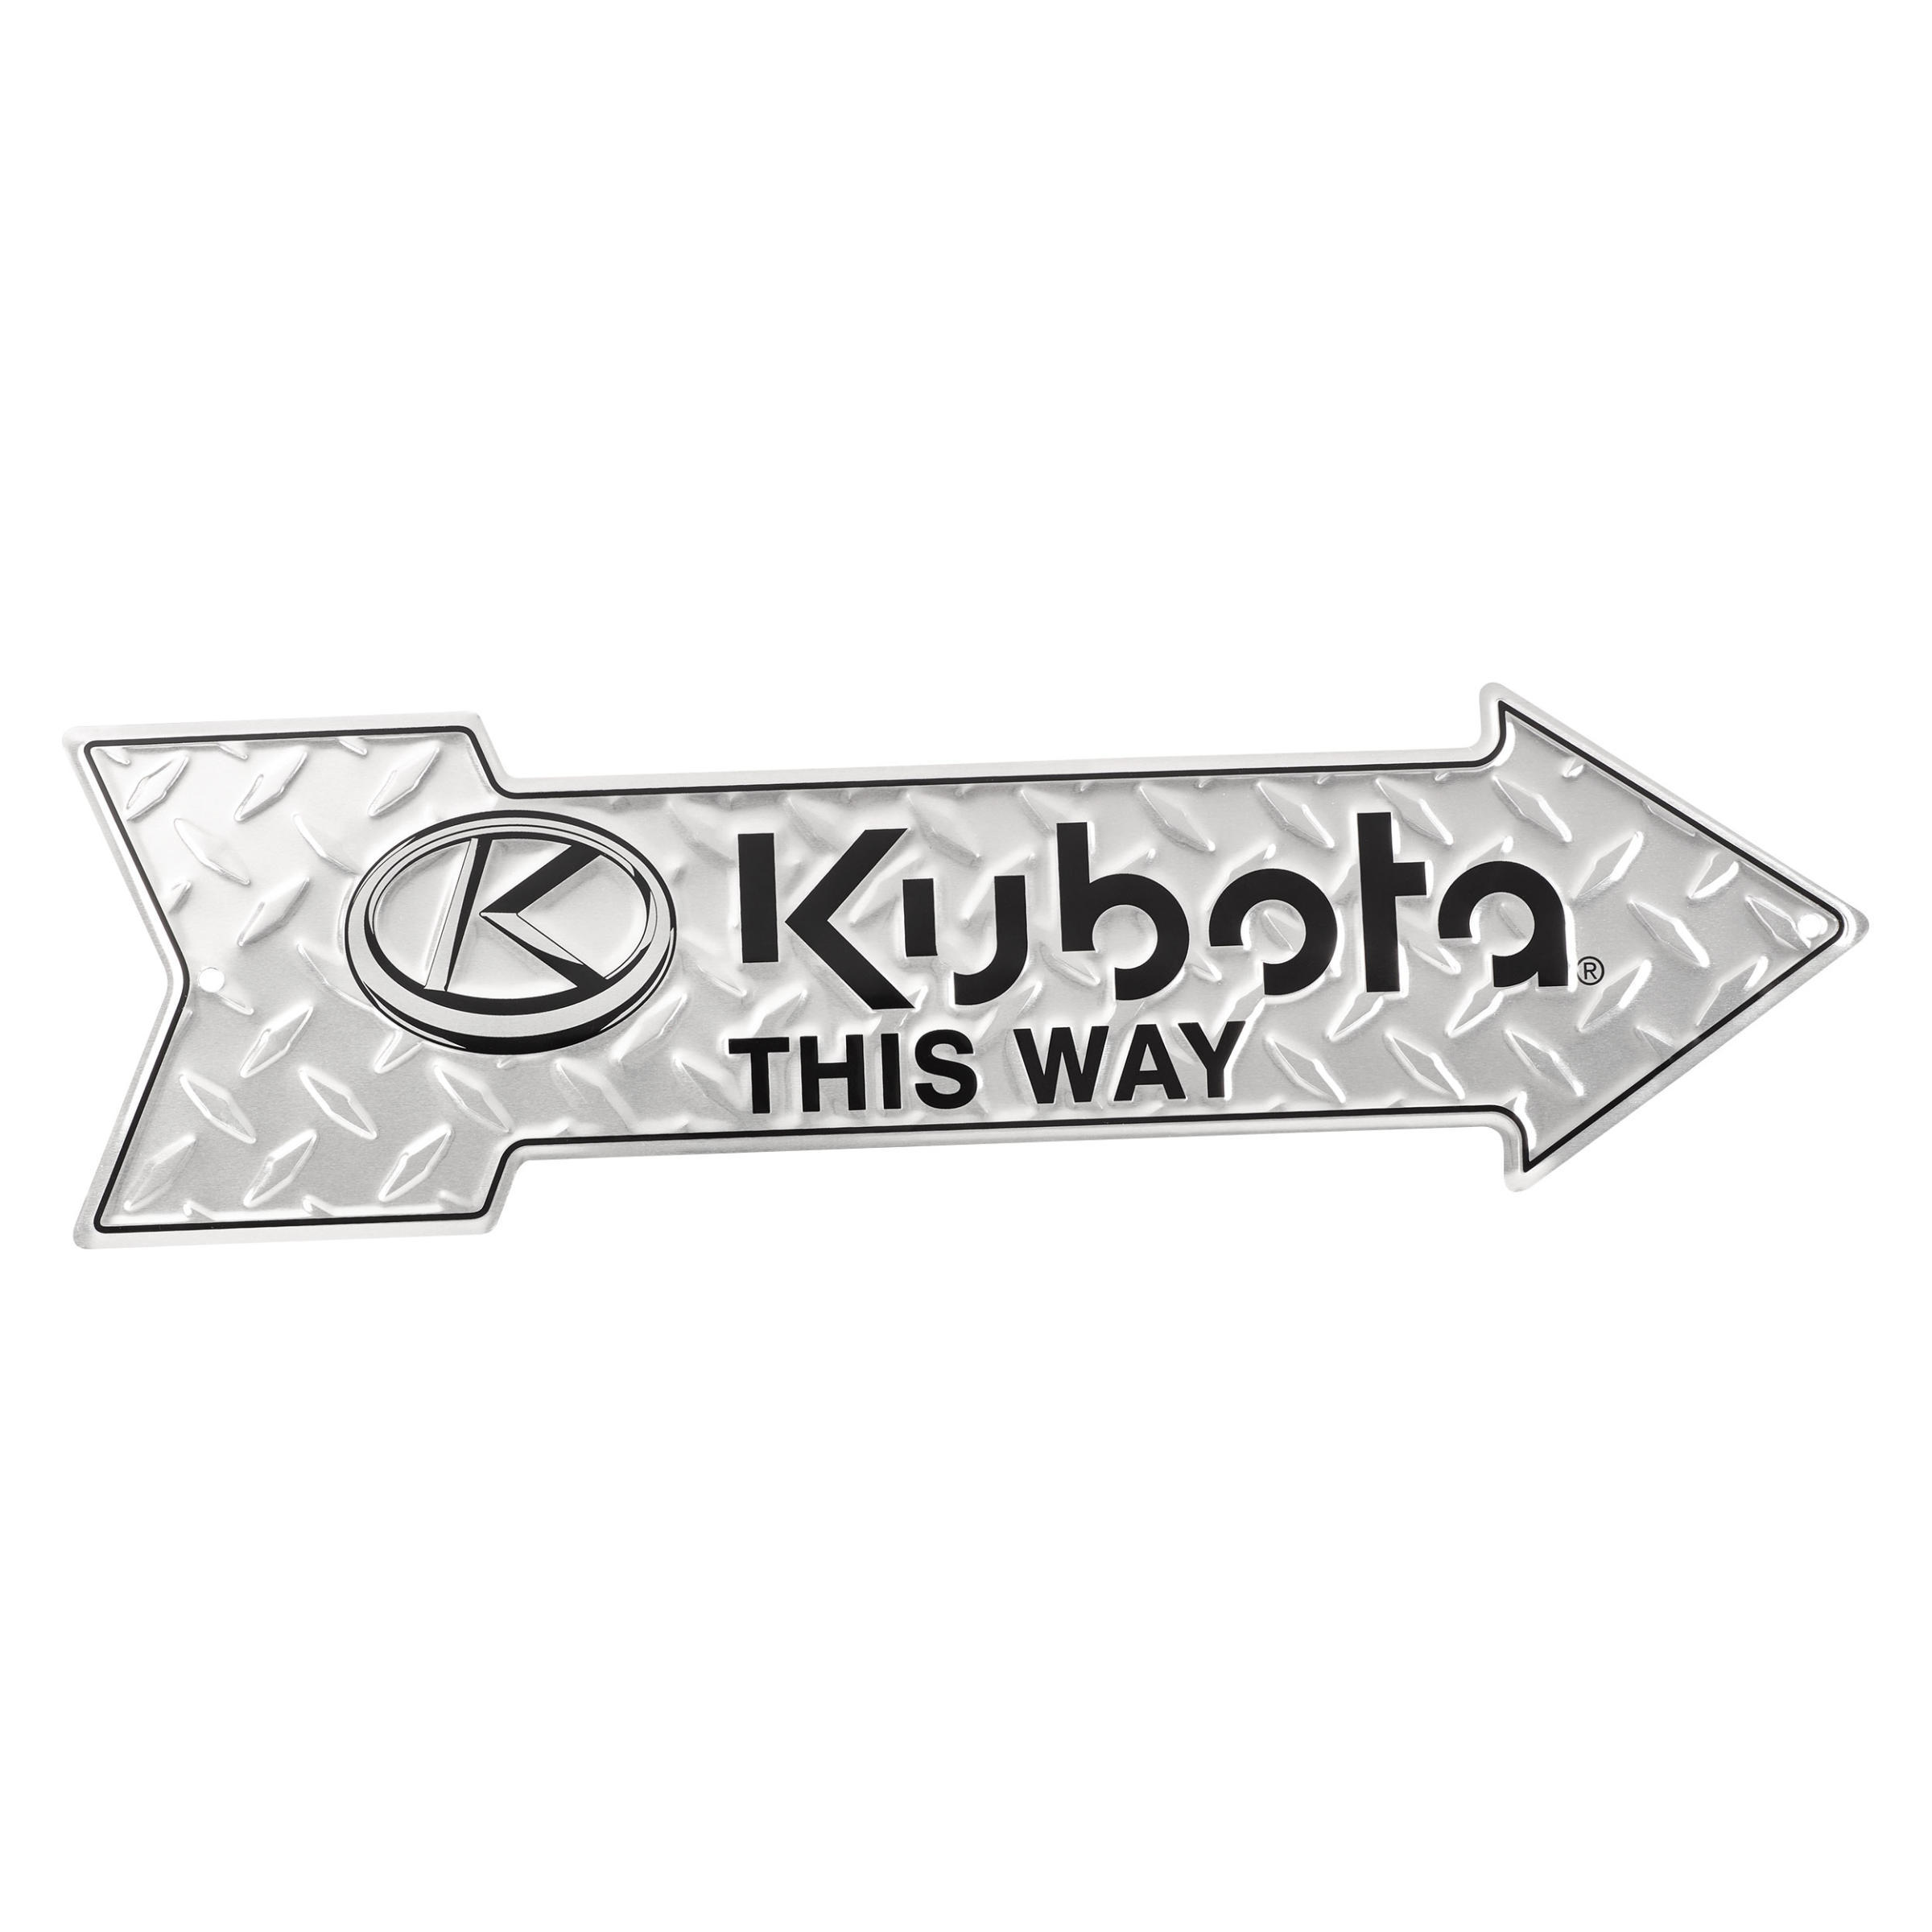 Kubota #2003209600001 Kubota Diamond Aluminum Arrow Sign